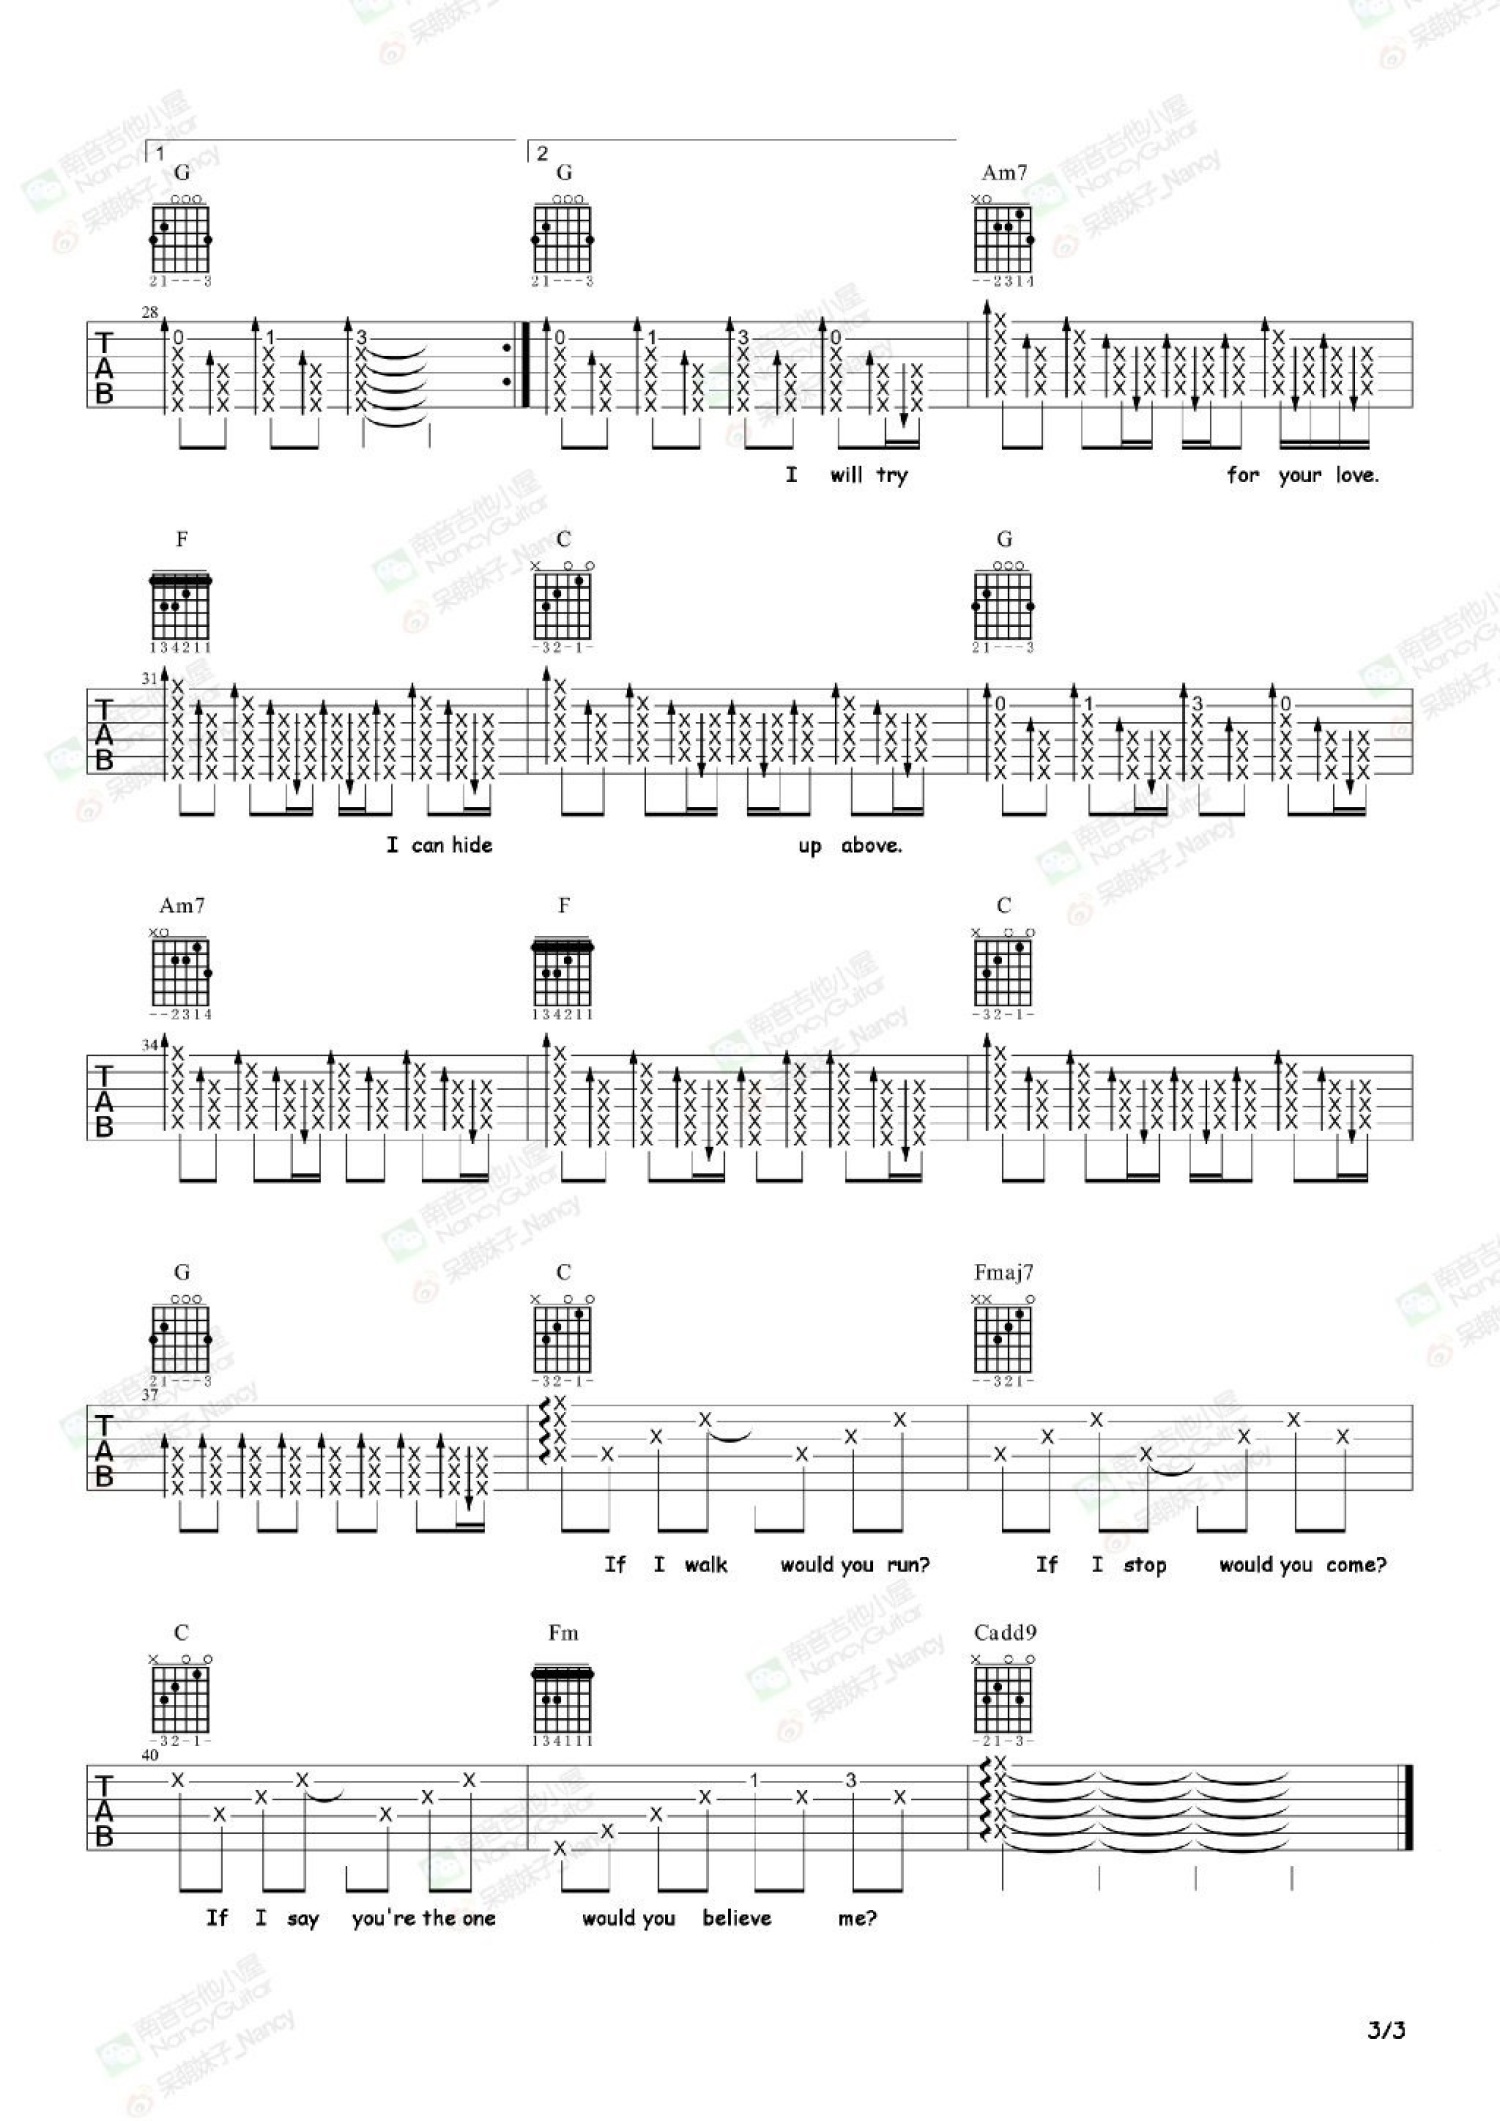 Asher Book-Try Sheet Music pdf, - Free Score Download ★